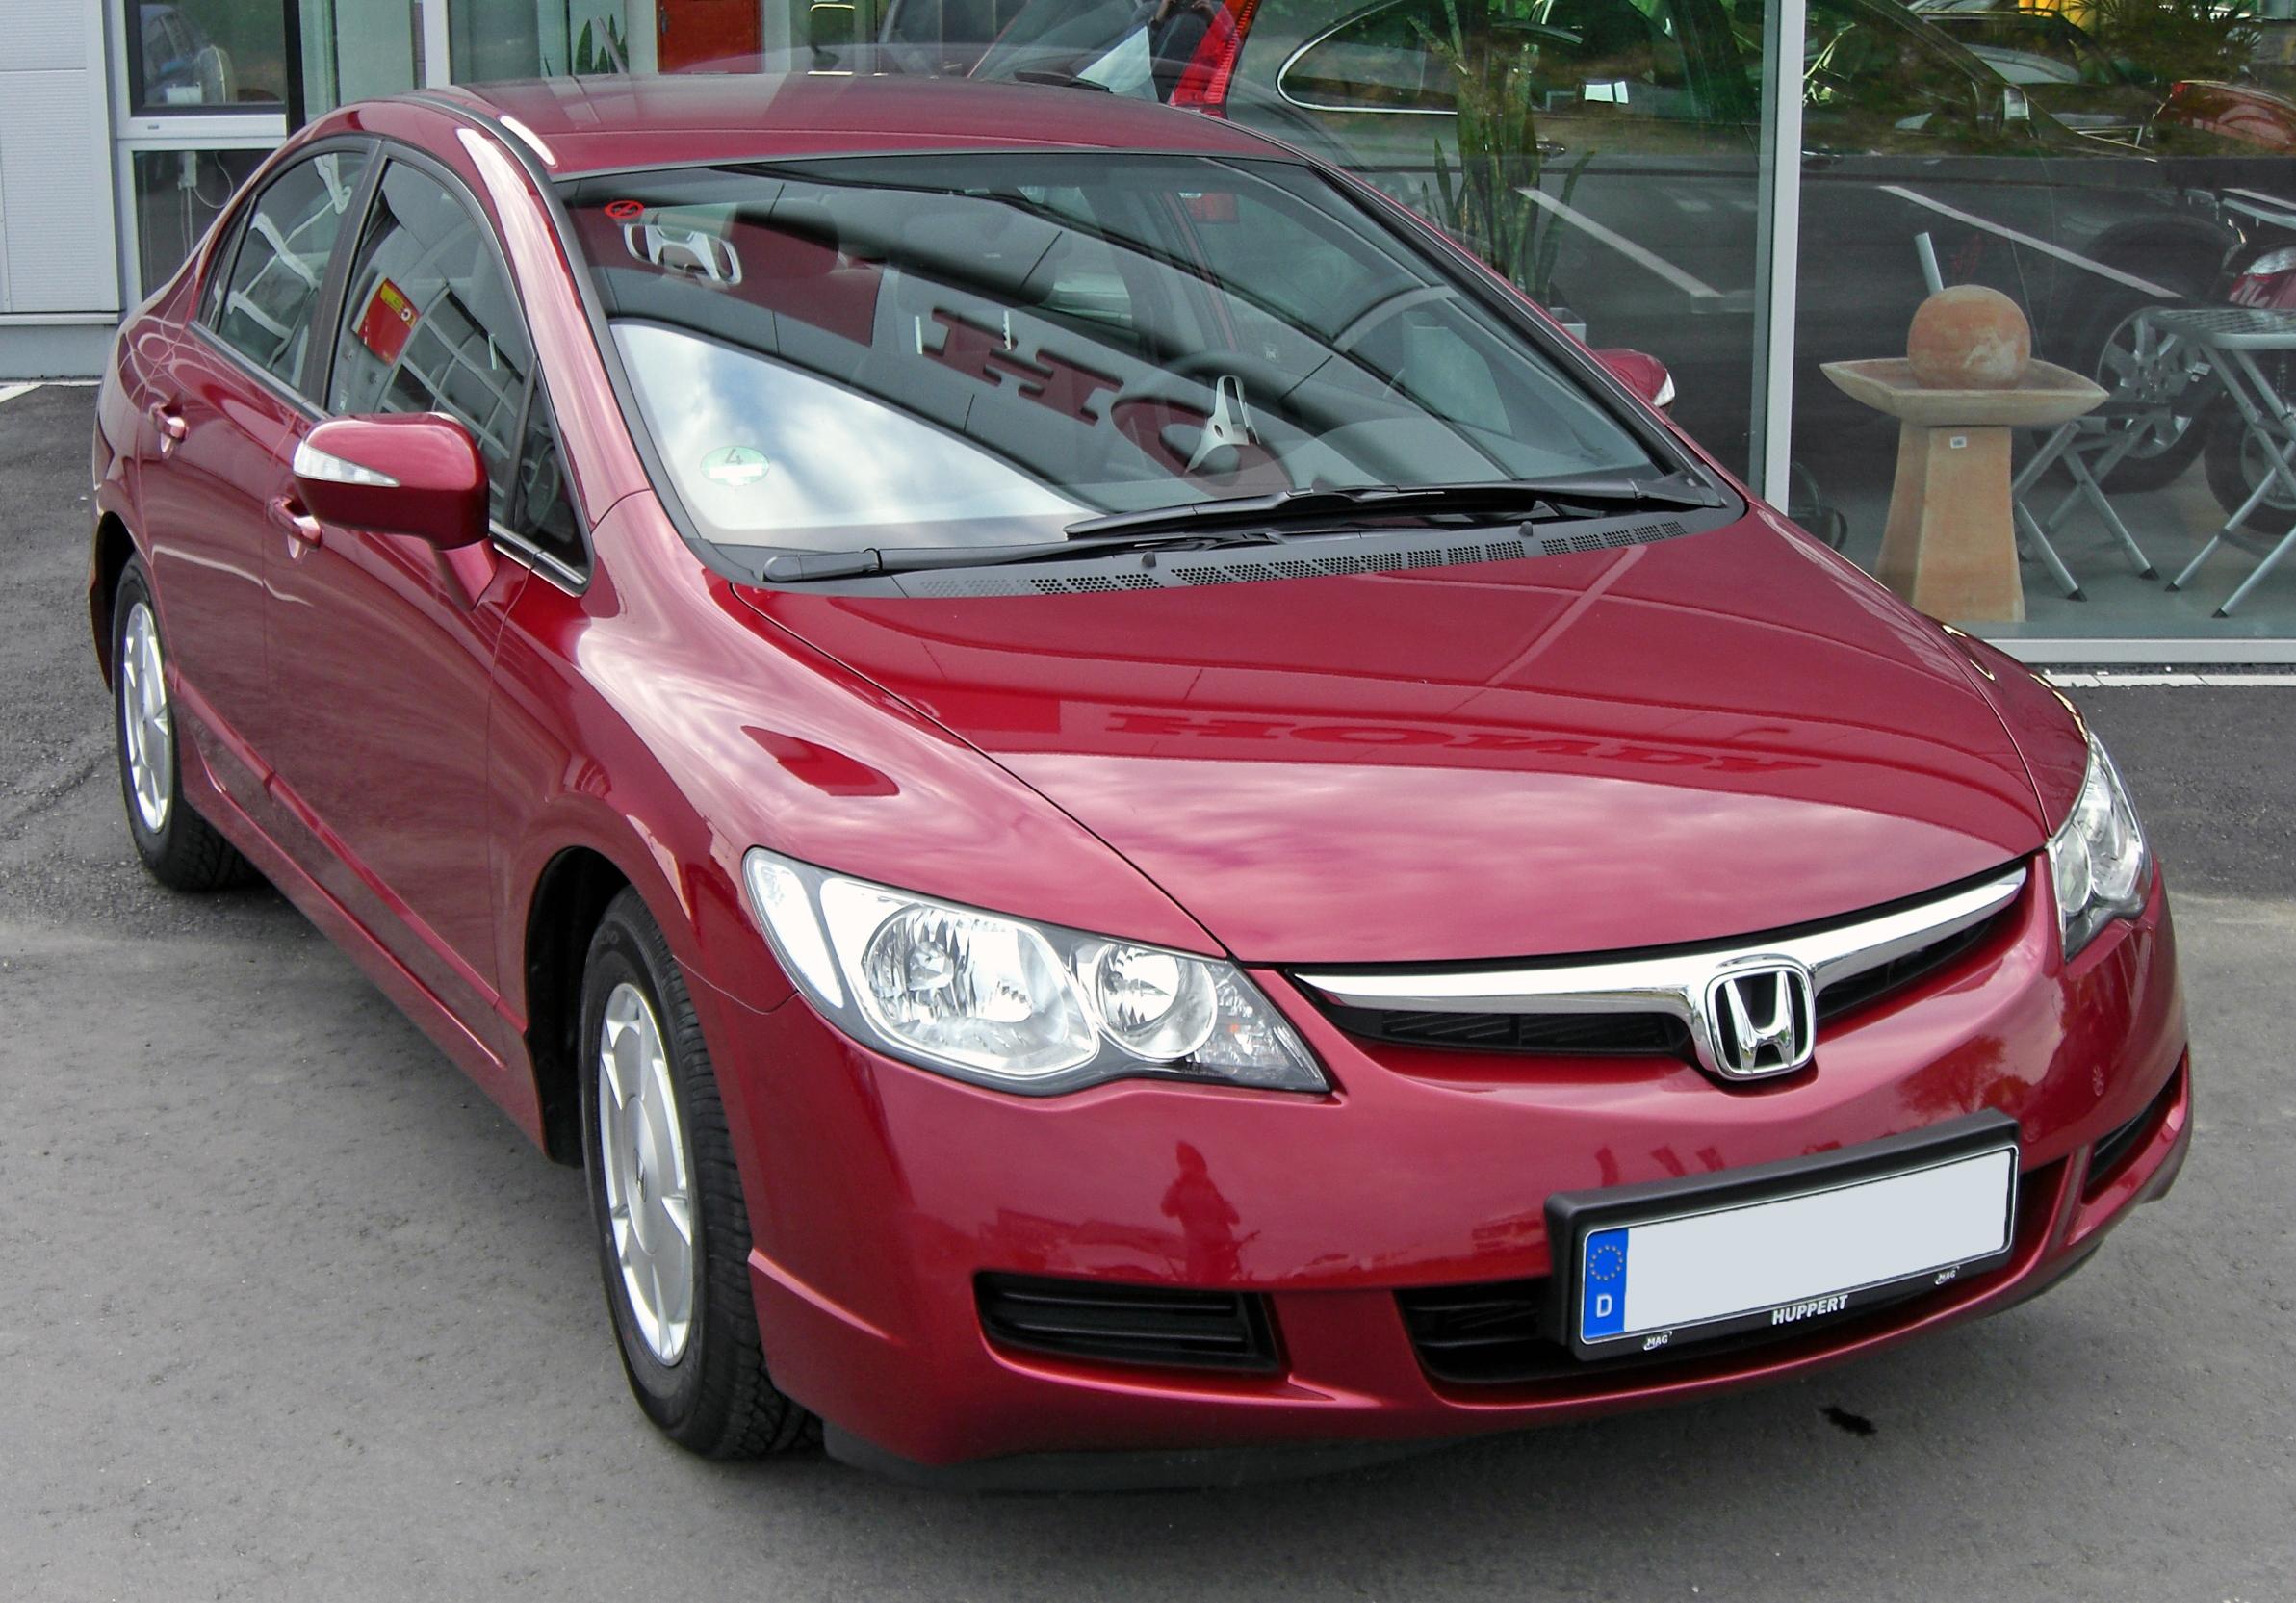 File:Honda Civic Hybrid 20090504 front.jpg - Wikimedia Commons